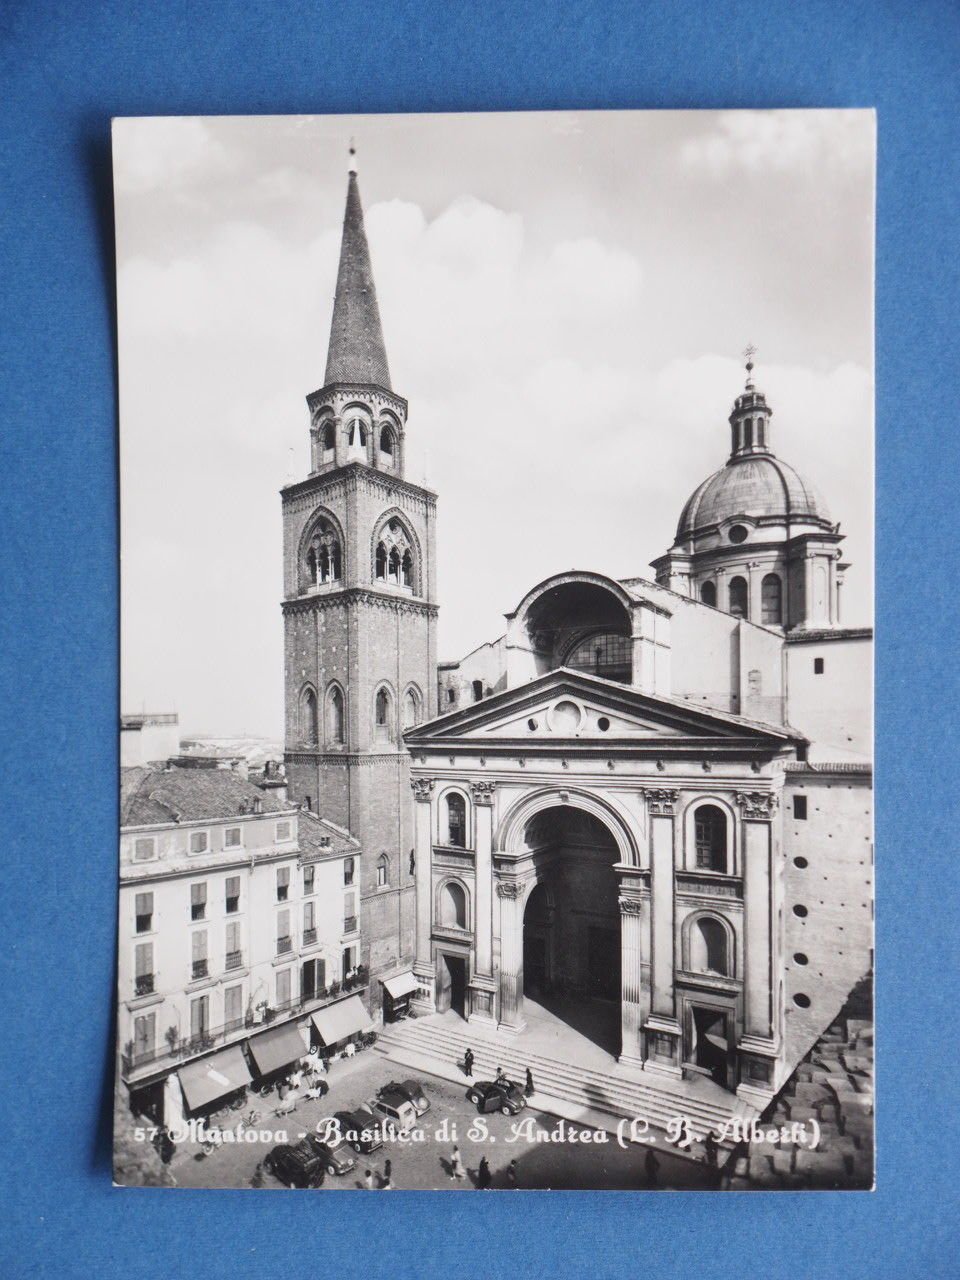 Cartolina Mantova - Basilica di S. Andrea - 1950 ca..